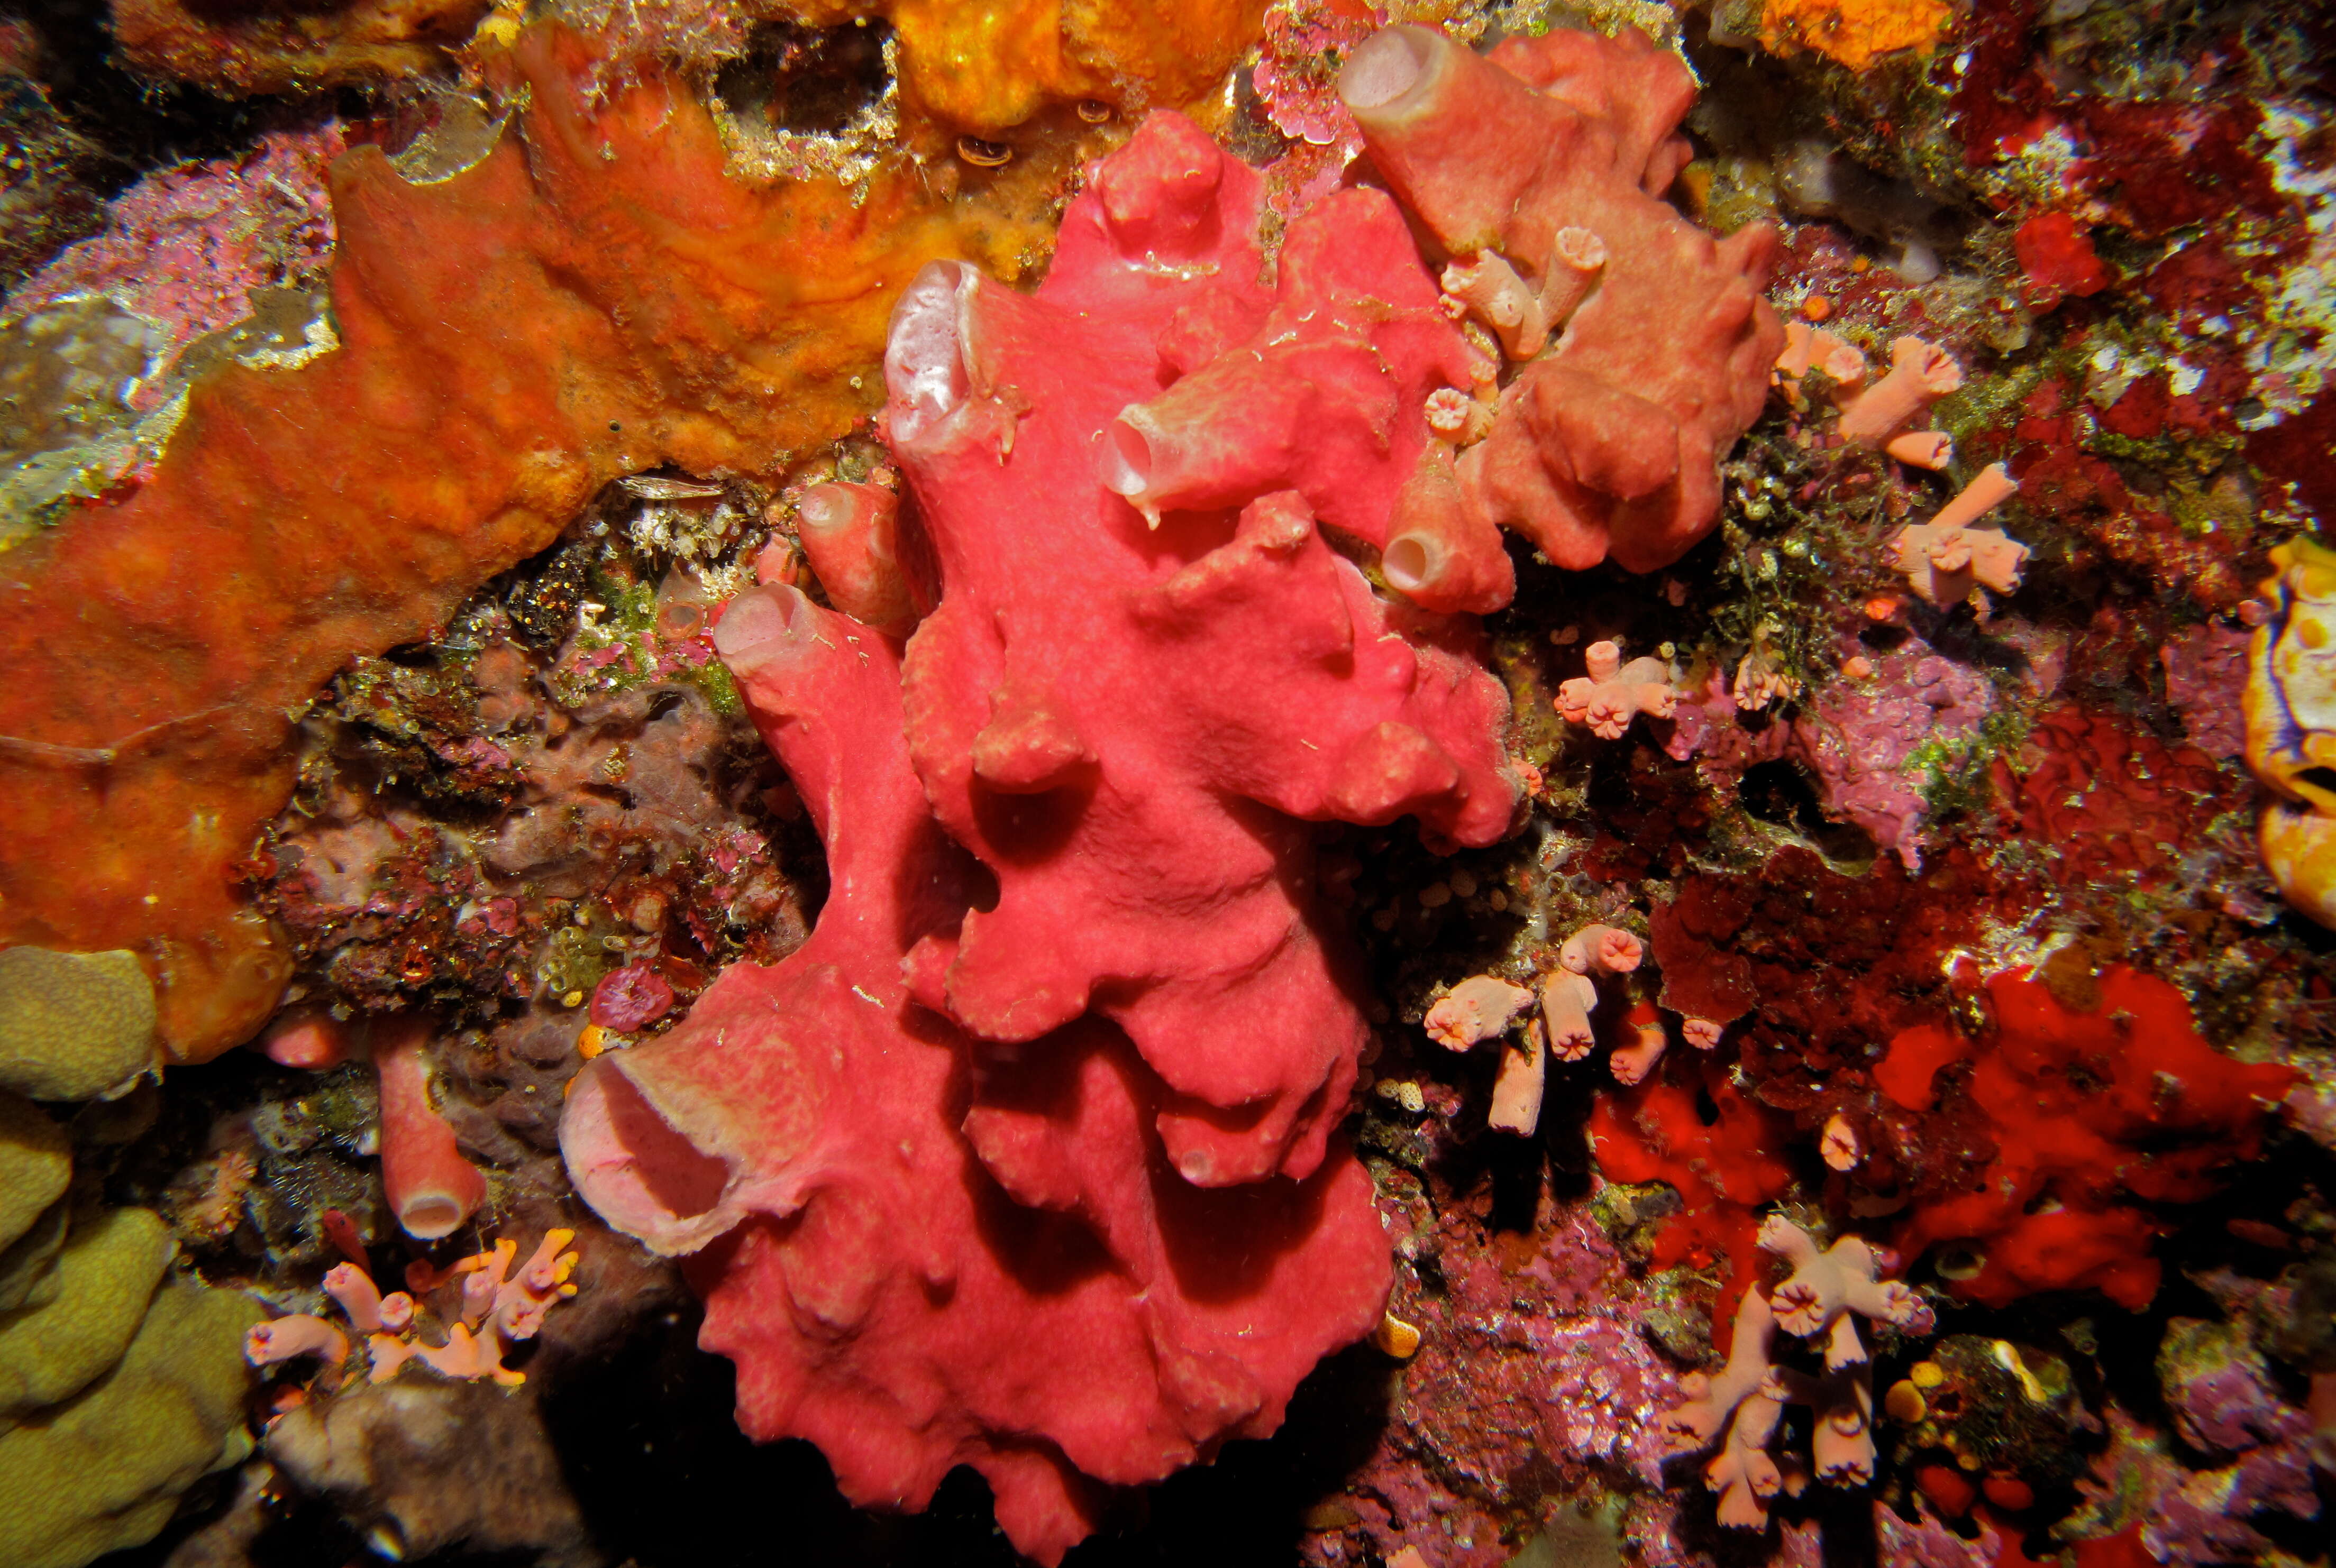 sponges - Encyclopedia of Life